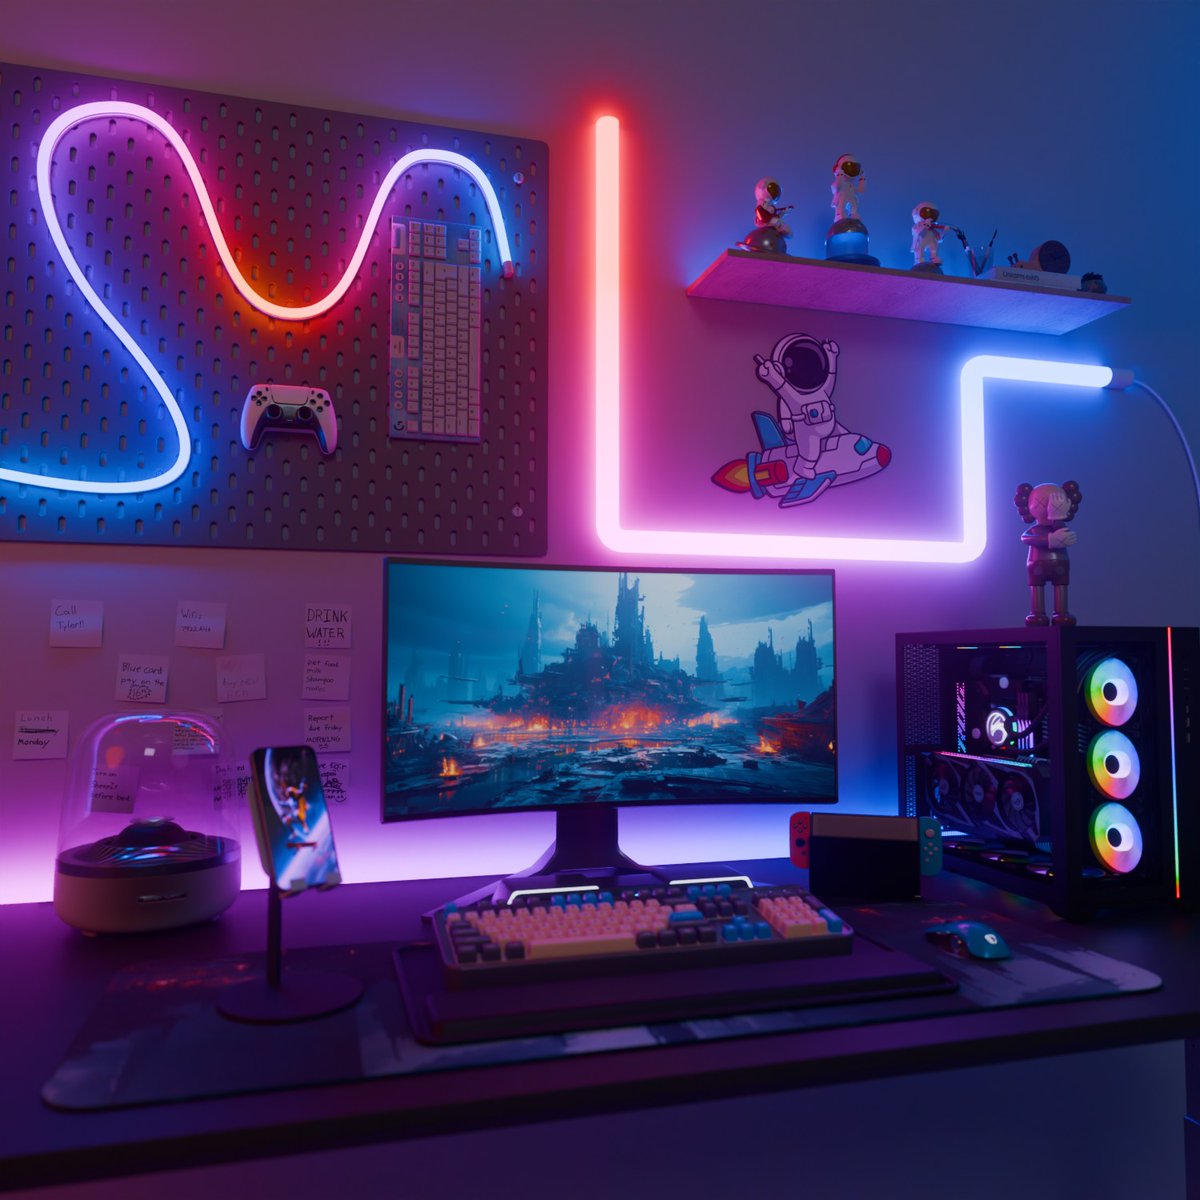 Upgrade your desk setup to absolute fab with AI-generated lighting!✨ 

#lepro #AIGeneratedLighting #tech #leproN1 #leproWL1 #walllight #desksetup #deskdecor #gamingroom #gamingsetup #dreamsetup